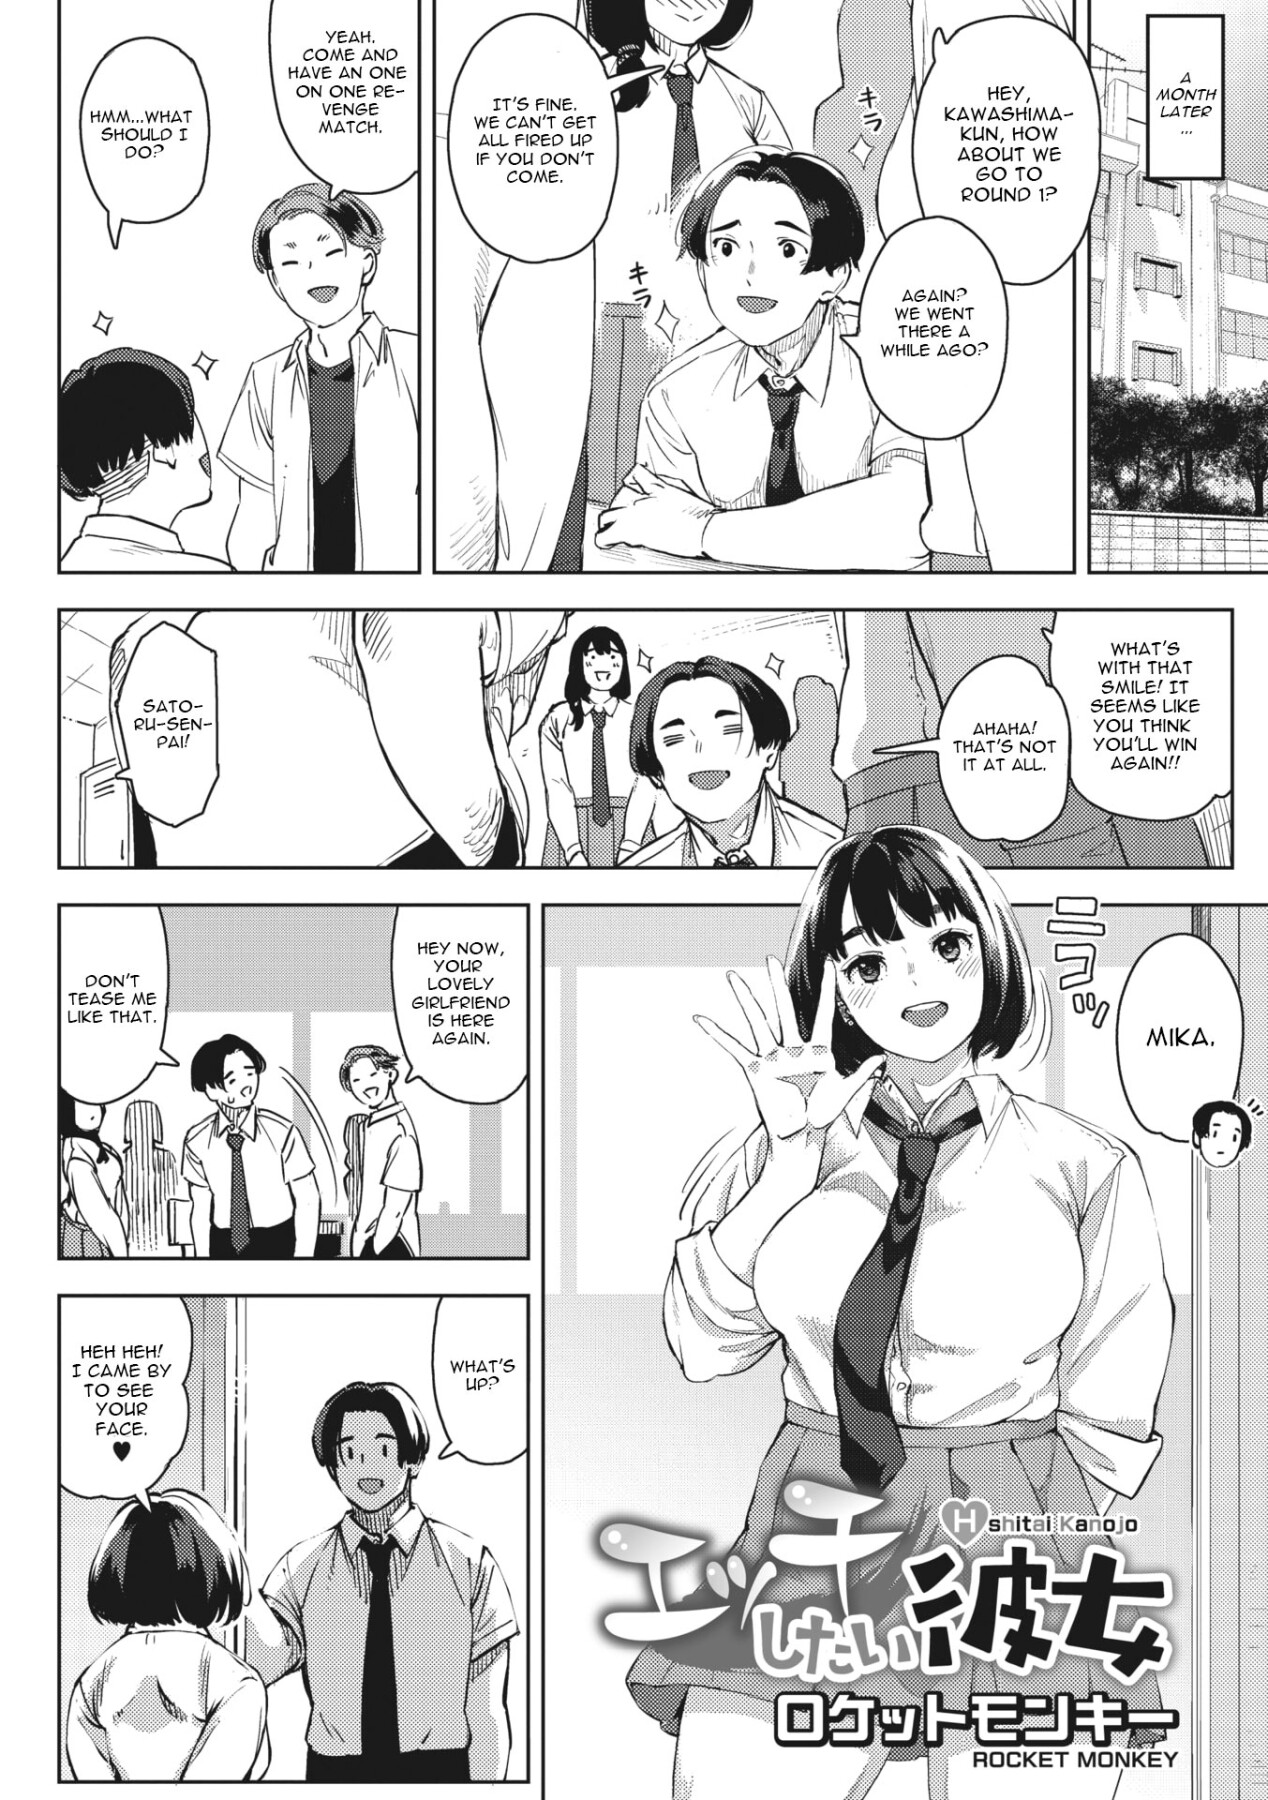 Hentai Manga Comic-My girlfriend who wants to have sex + My girlfriend who wants to have sex-Chapter 2-2